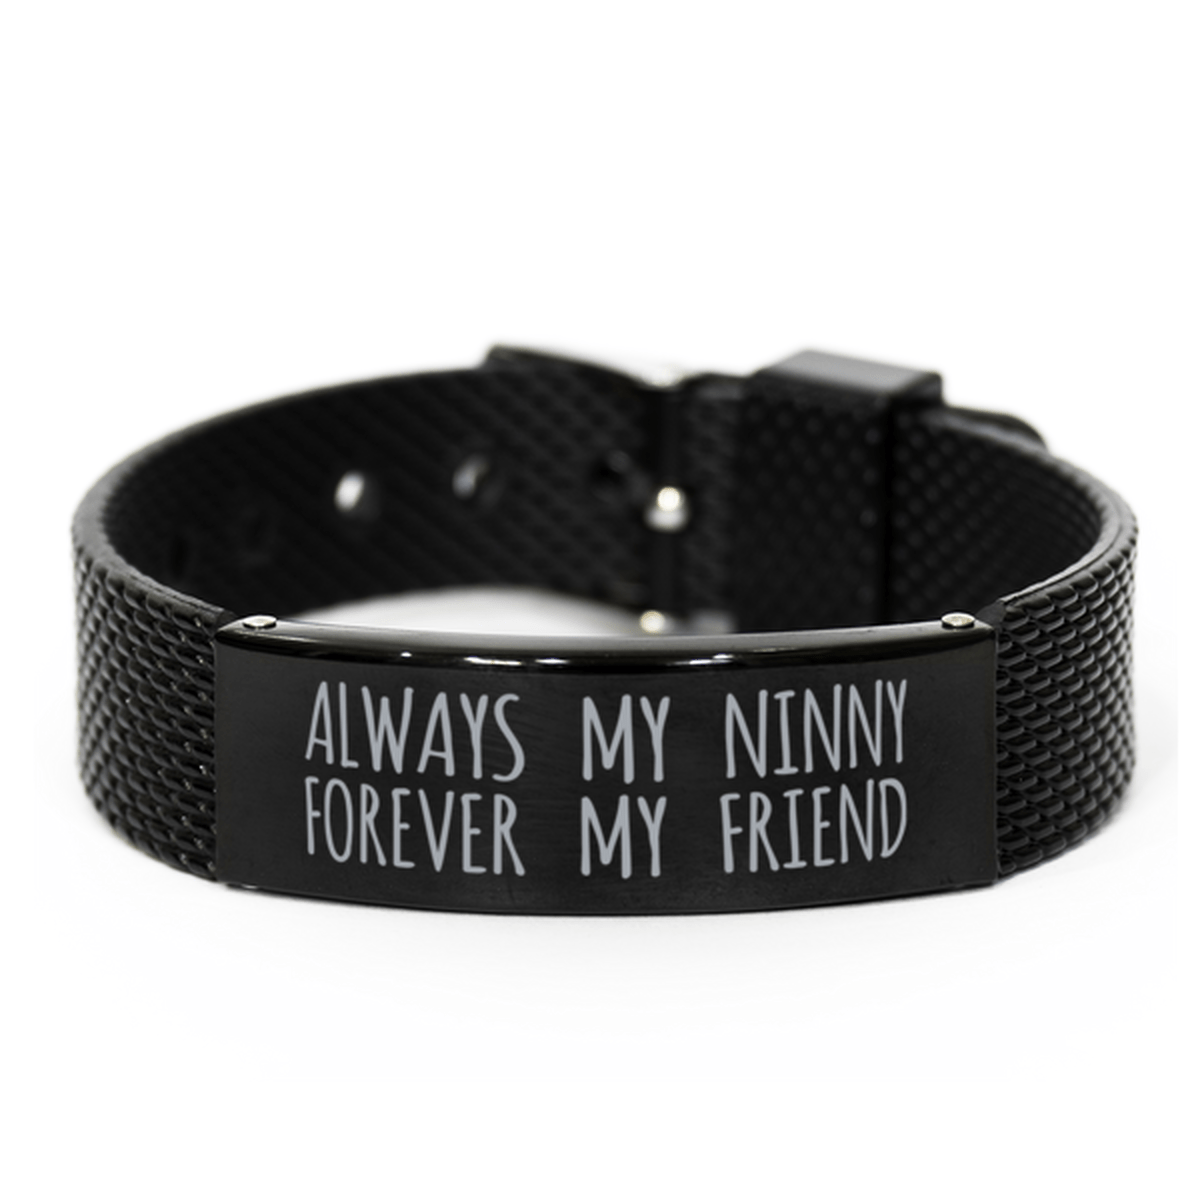 Inspirational Ninny Black Shark Mesh Bracelet, Always My Ninny Forever My Friend, Best Birthday Gifts for Family Friends